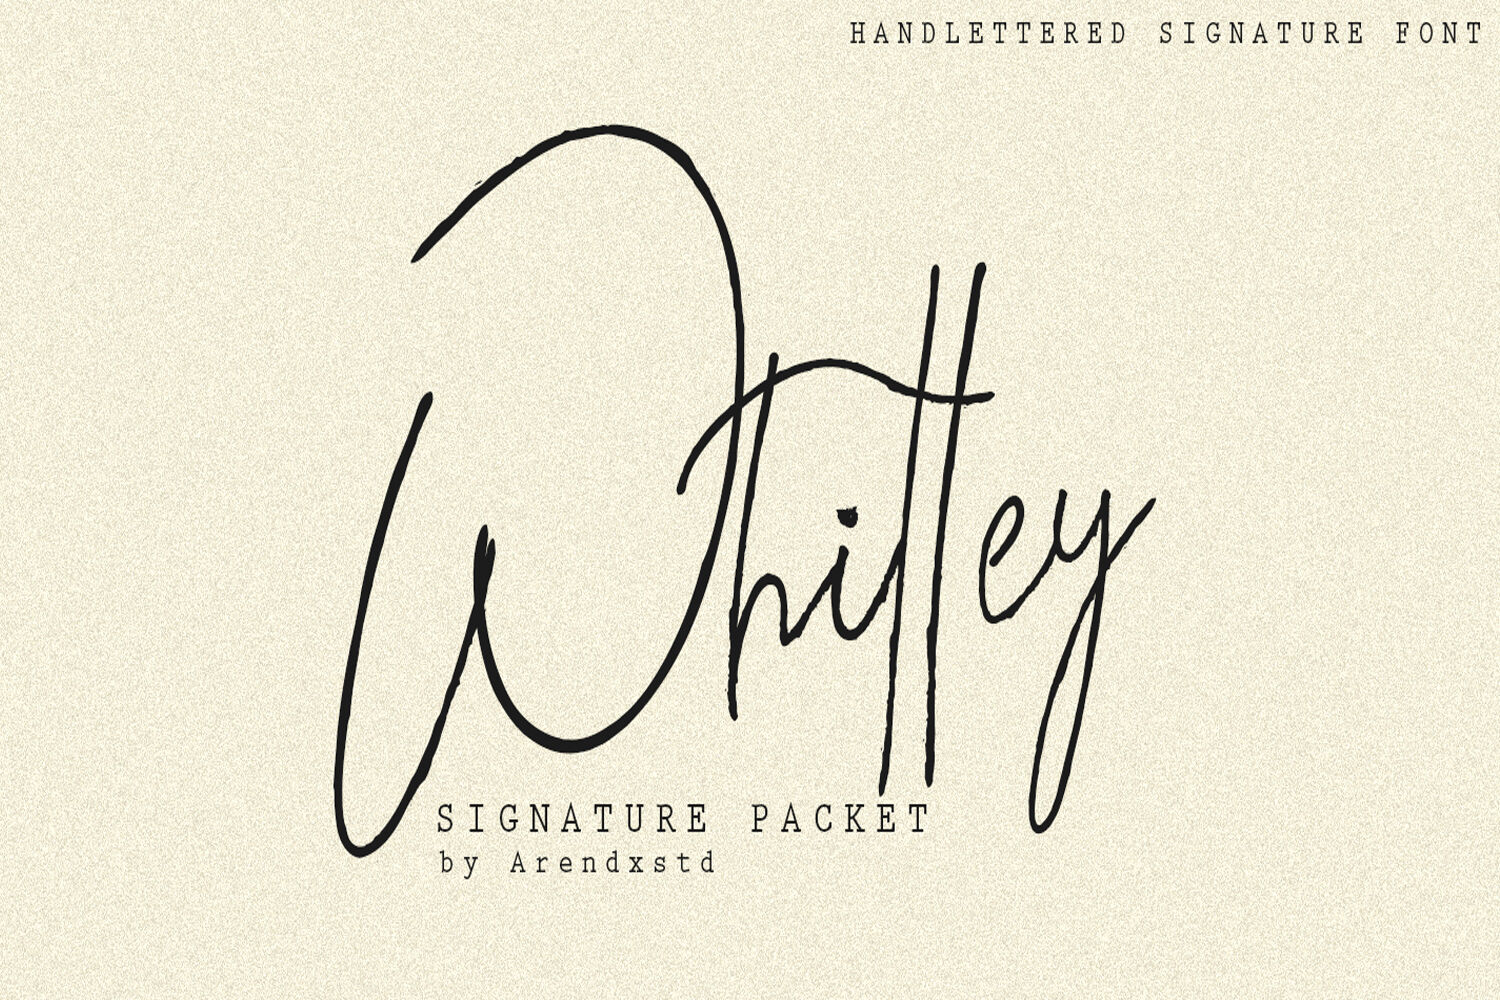 Whitley Signature Typeface By Arendxstudio Thehungryjpeg Com